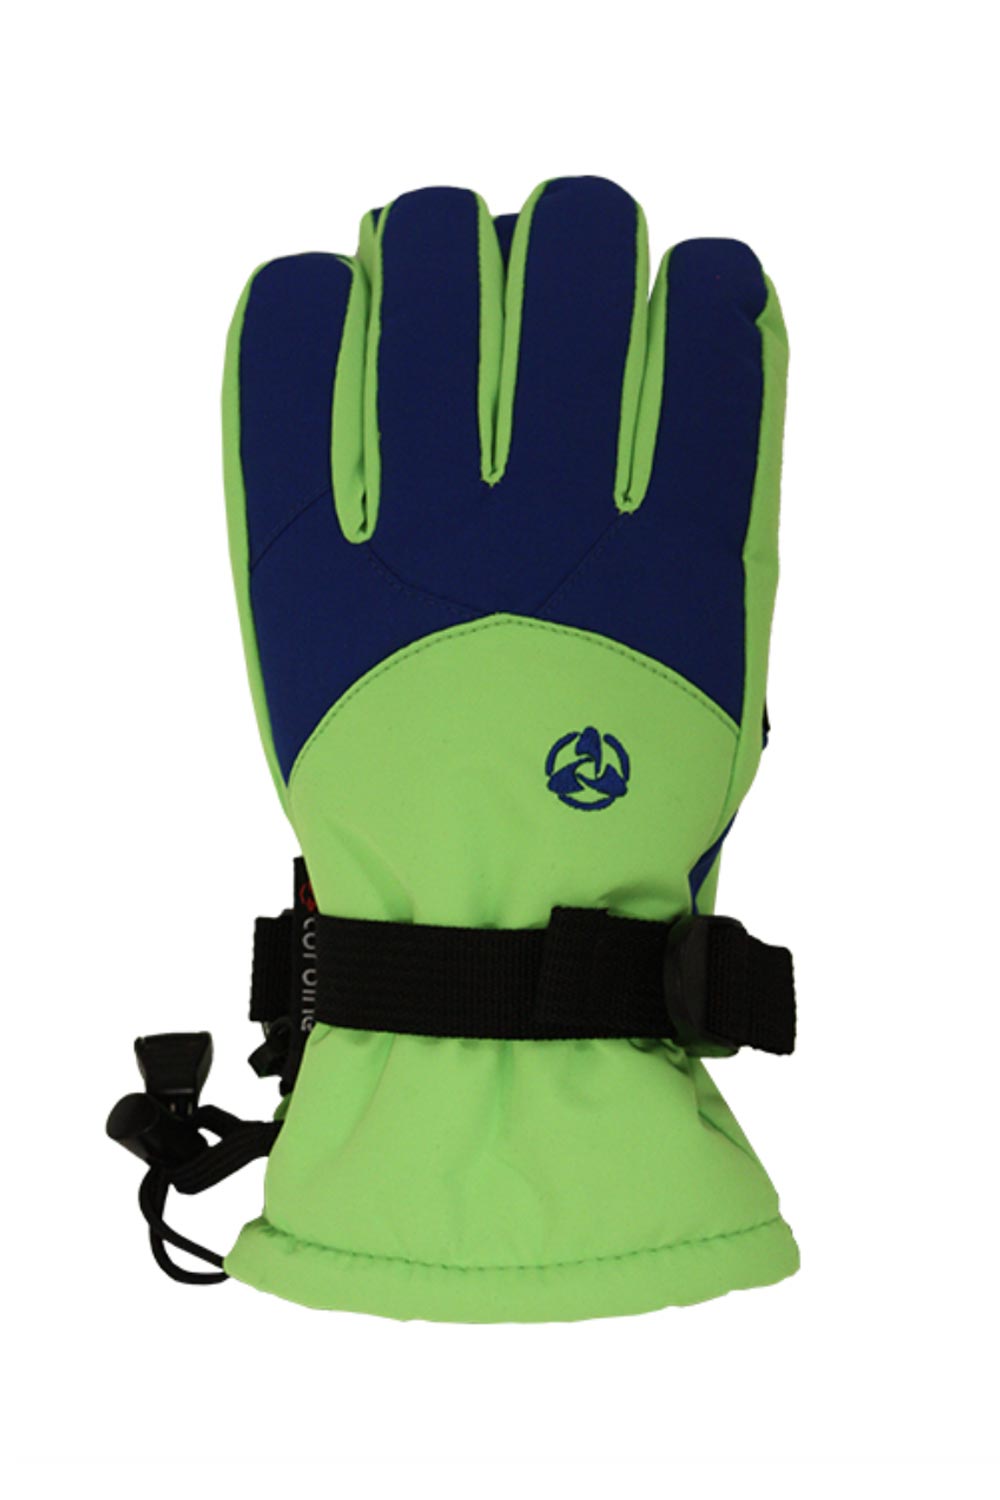 Boys' Turbine Blazer ski gloves, lime green and navy